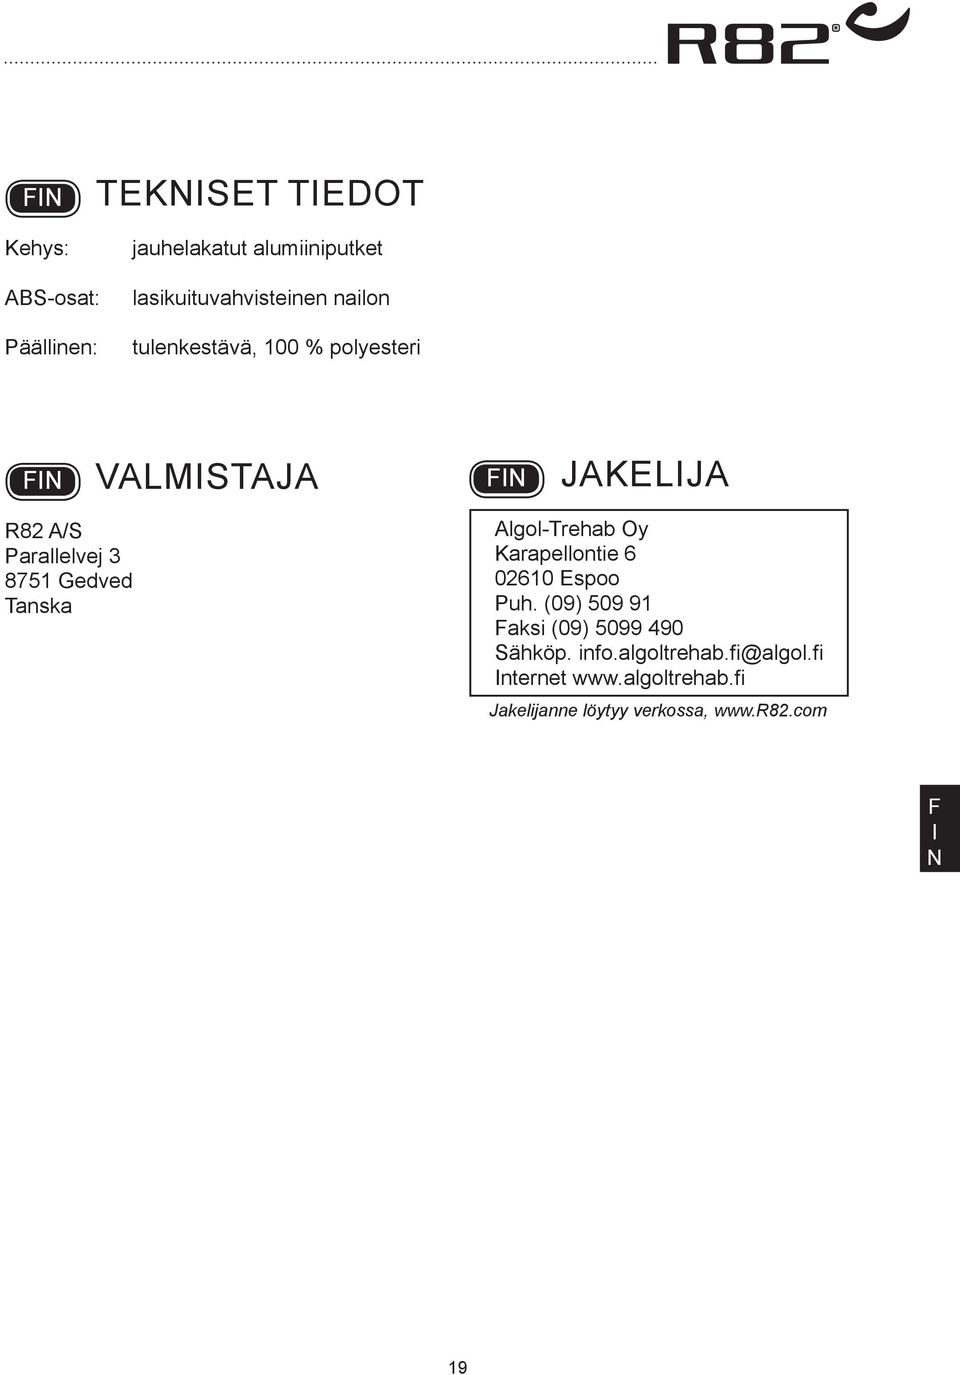 lgol-trehab Oy Karapellontie 6 02610 Espoo Puh. (09) 509 91 aksi (09) 5099 490 Sähköp. info.